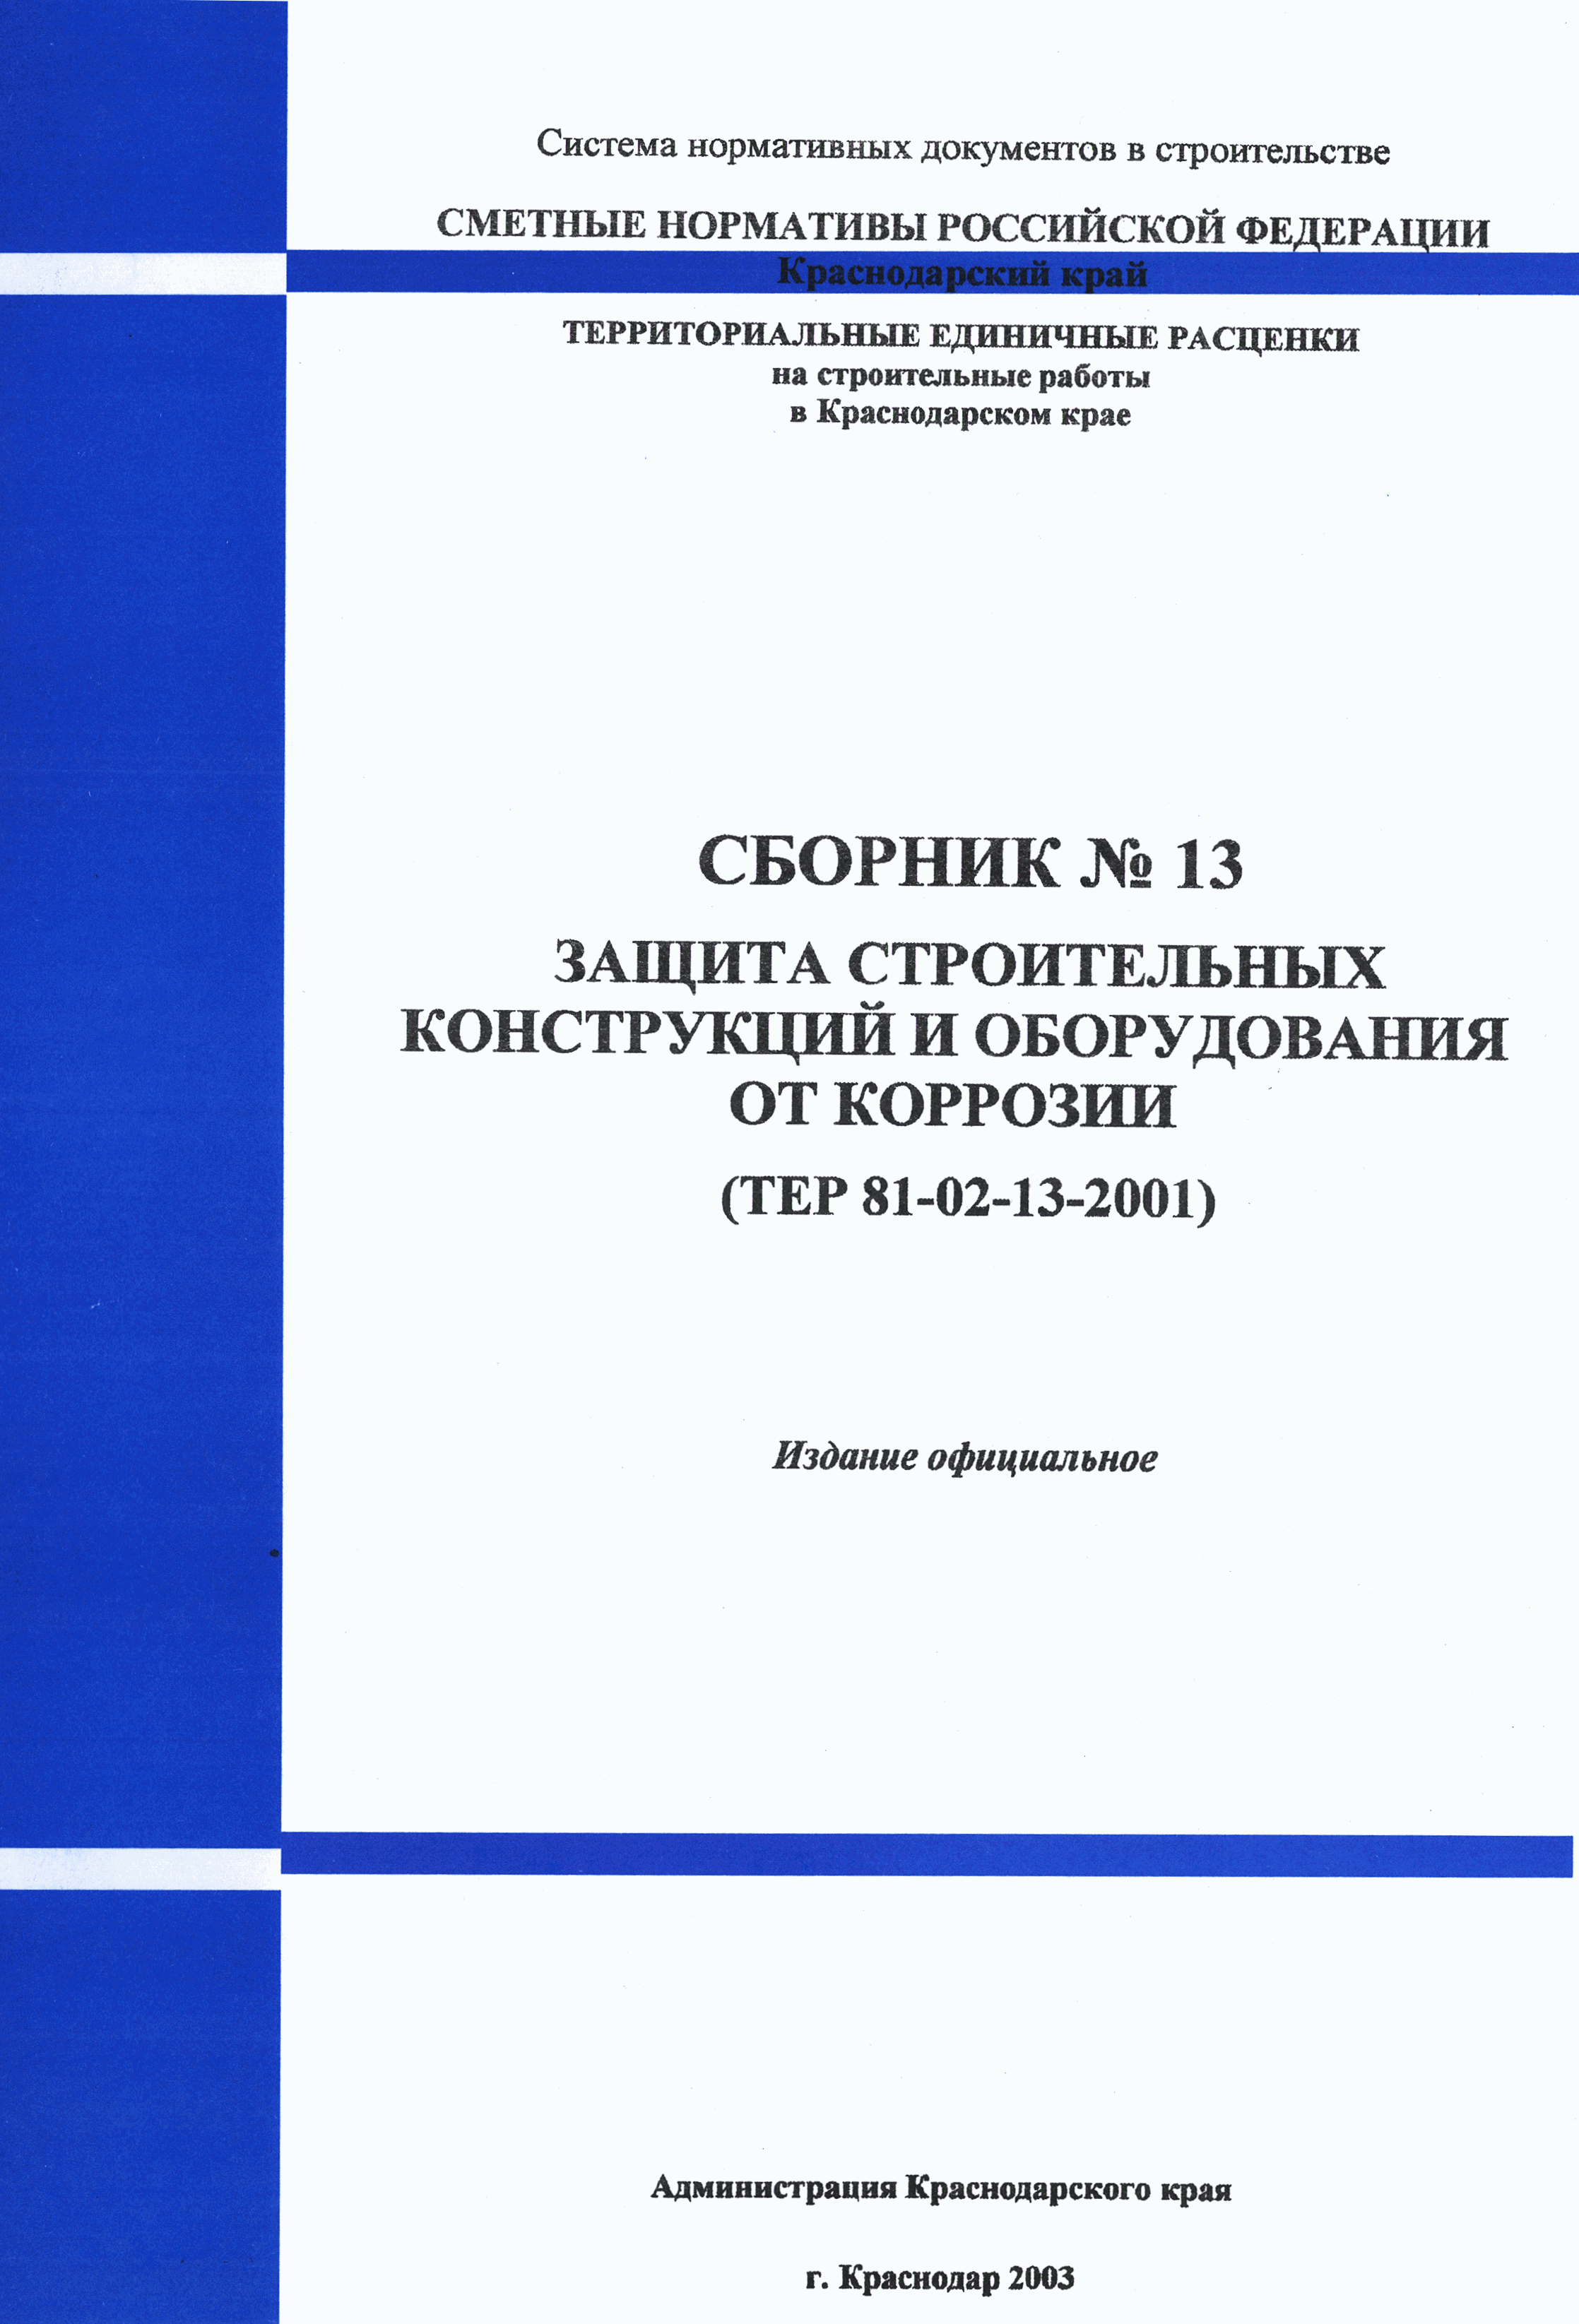 ТЕР Краснодарского края 2001-13